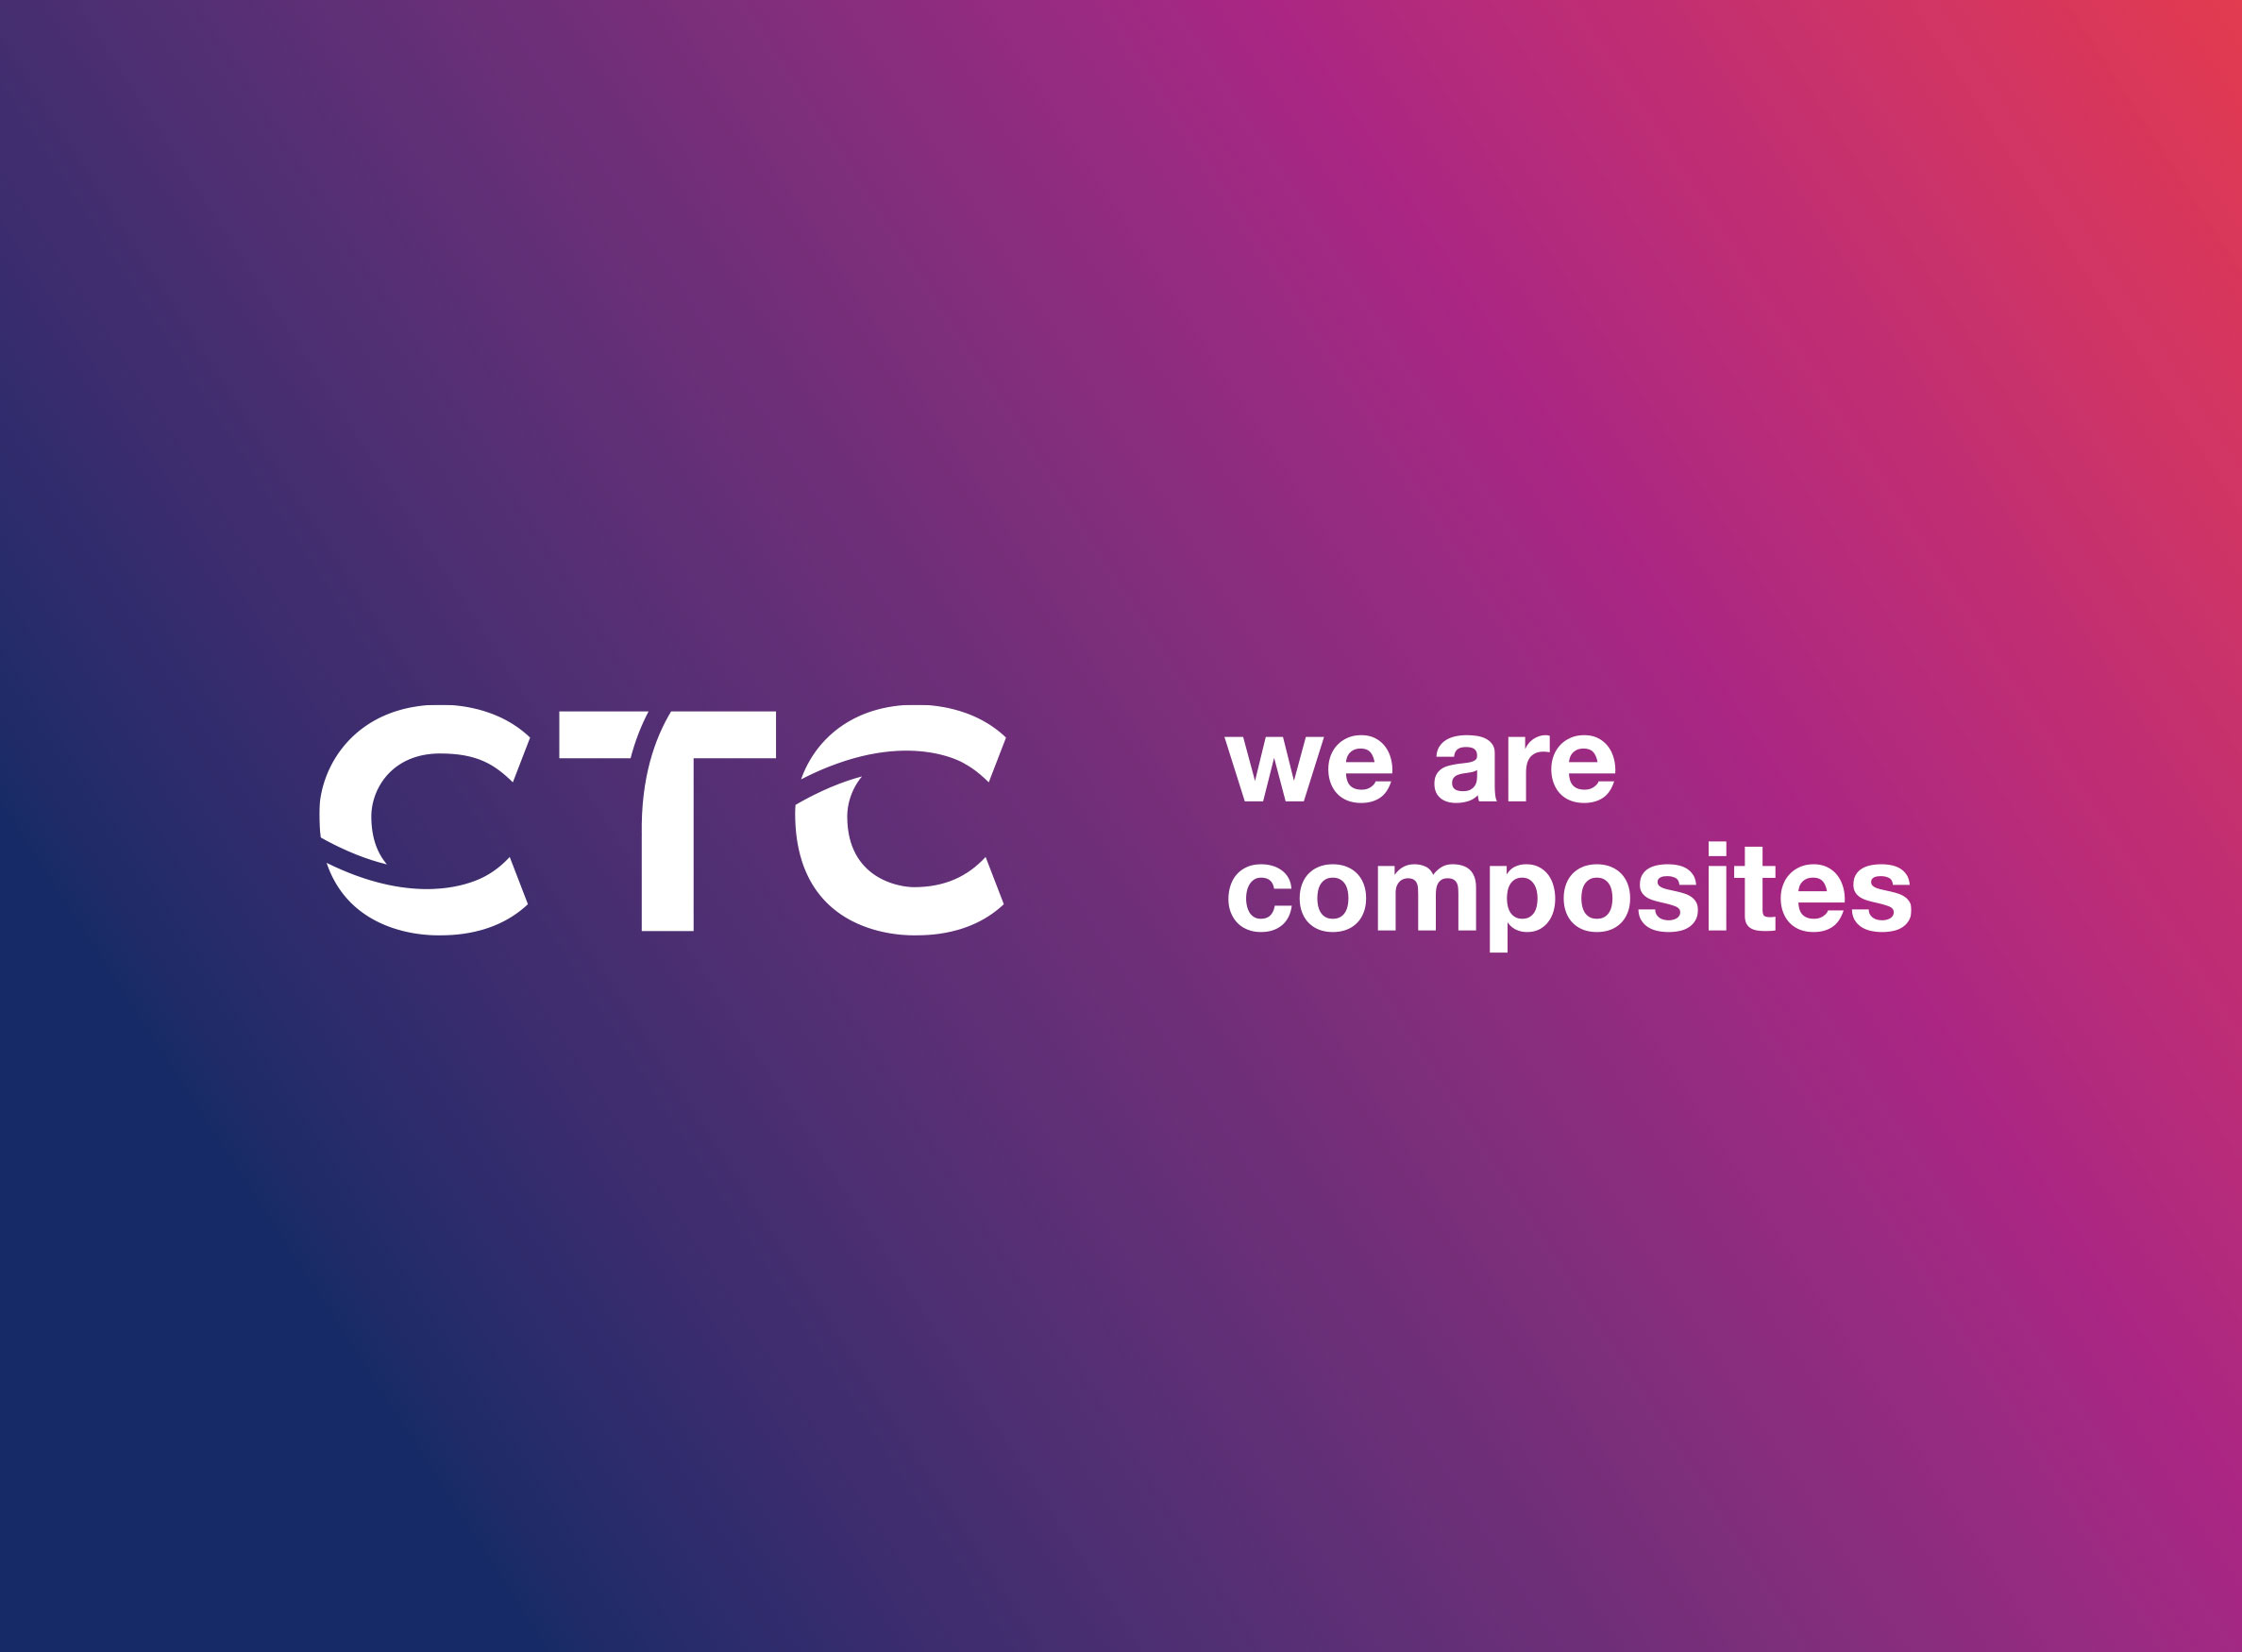 ctc-composites